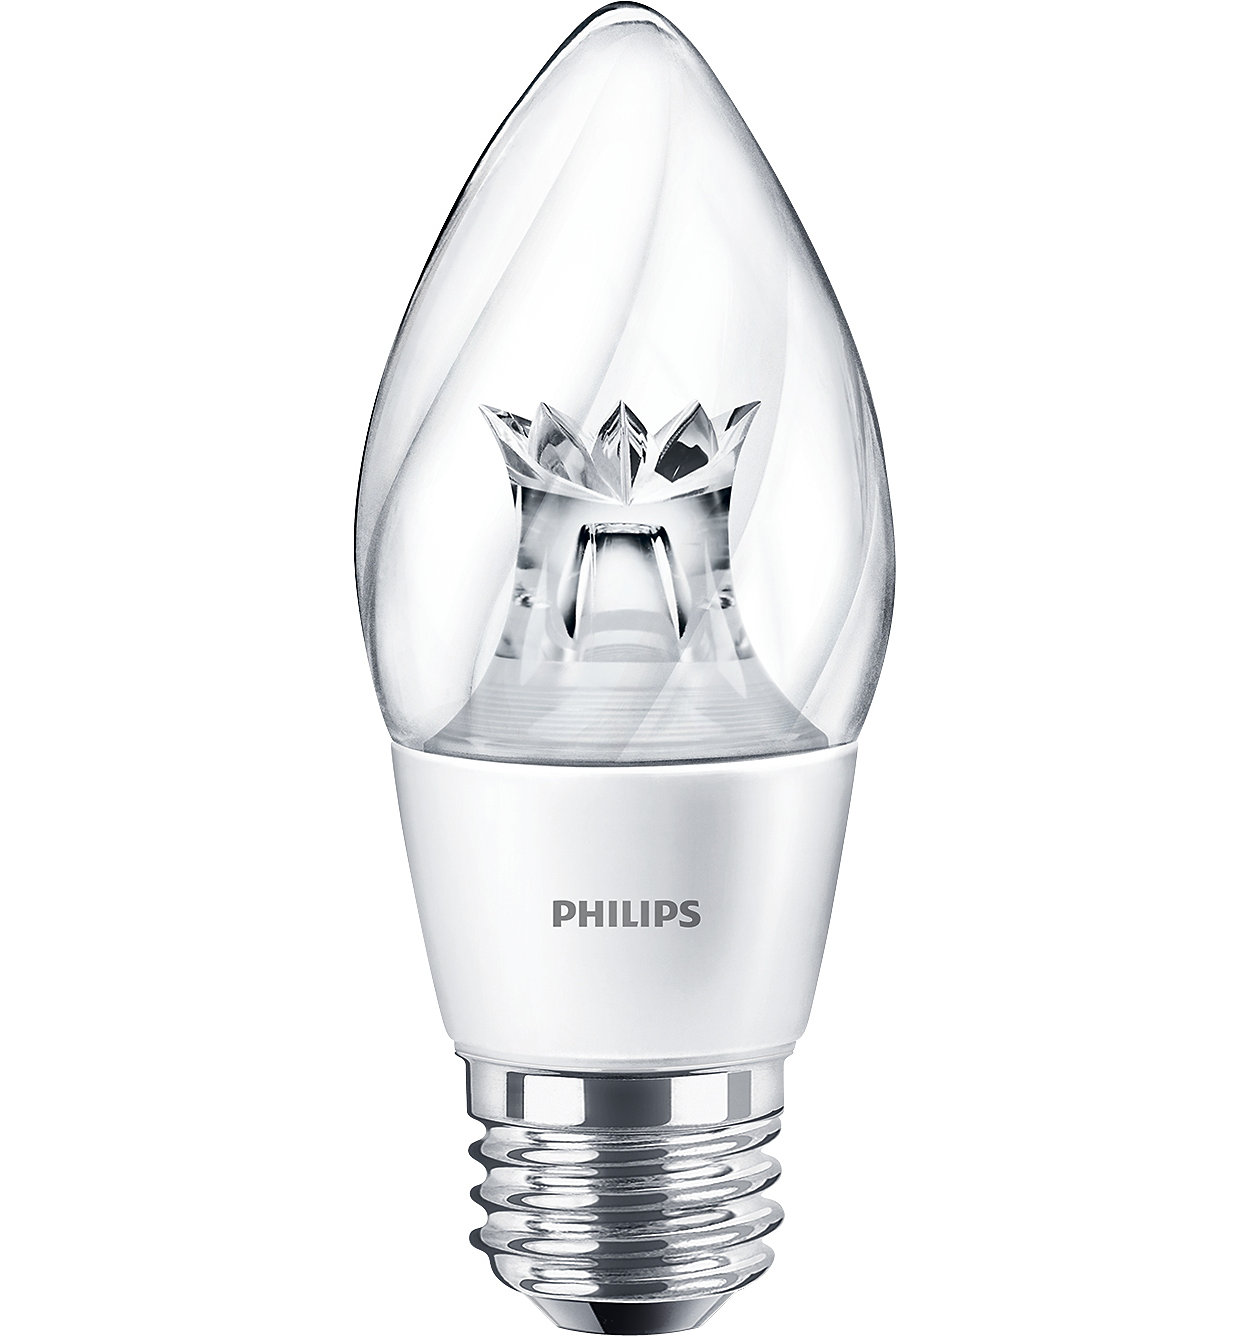 Energy saving elegance with improved lumens and design versatility